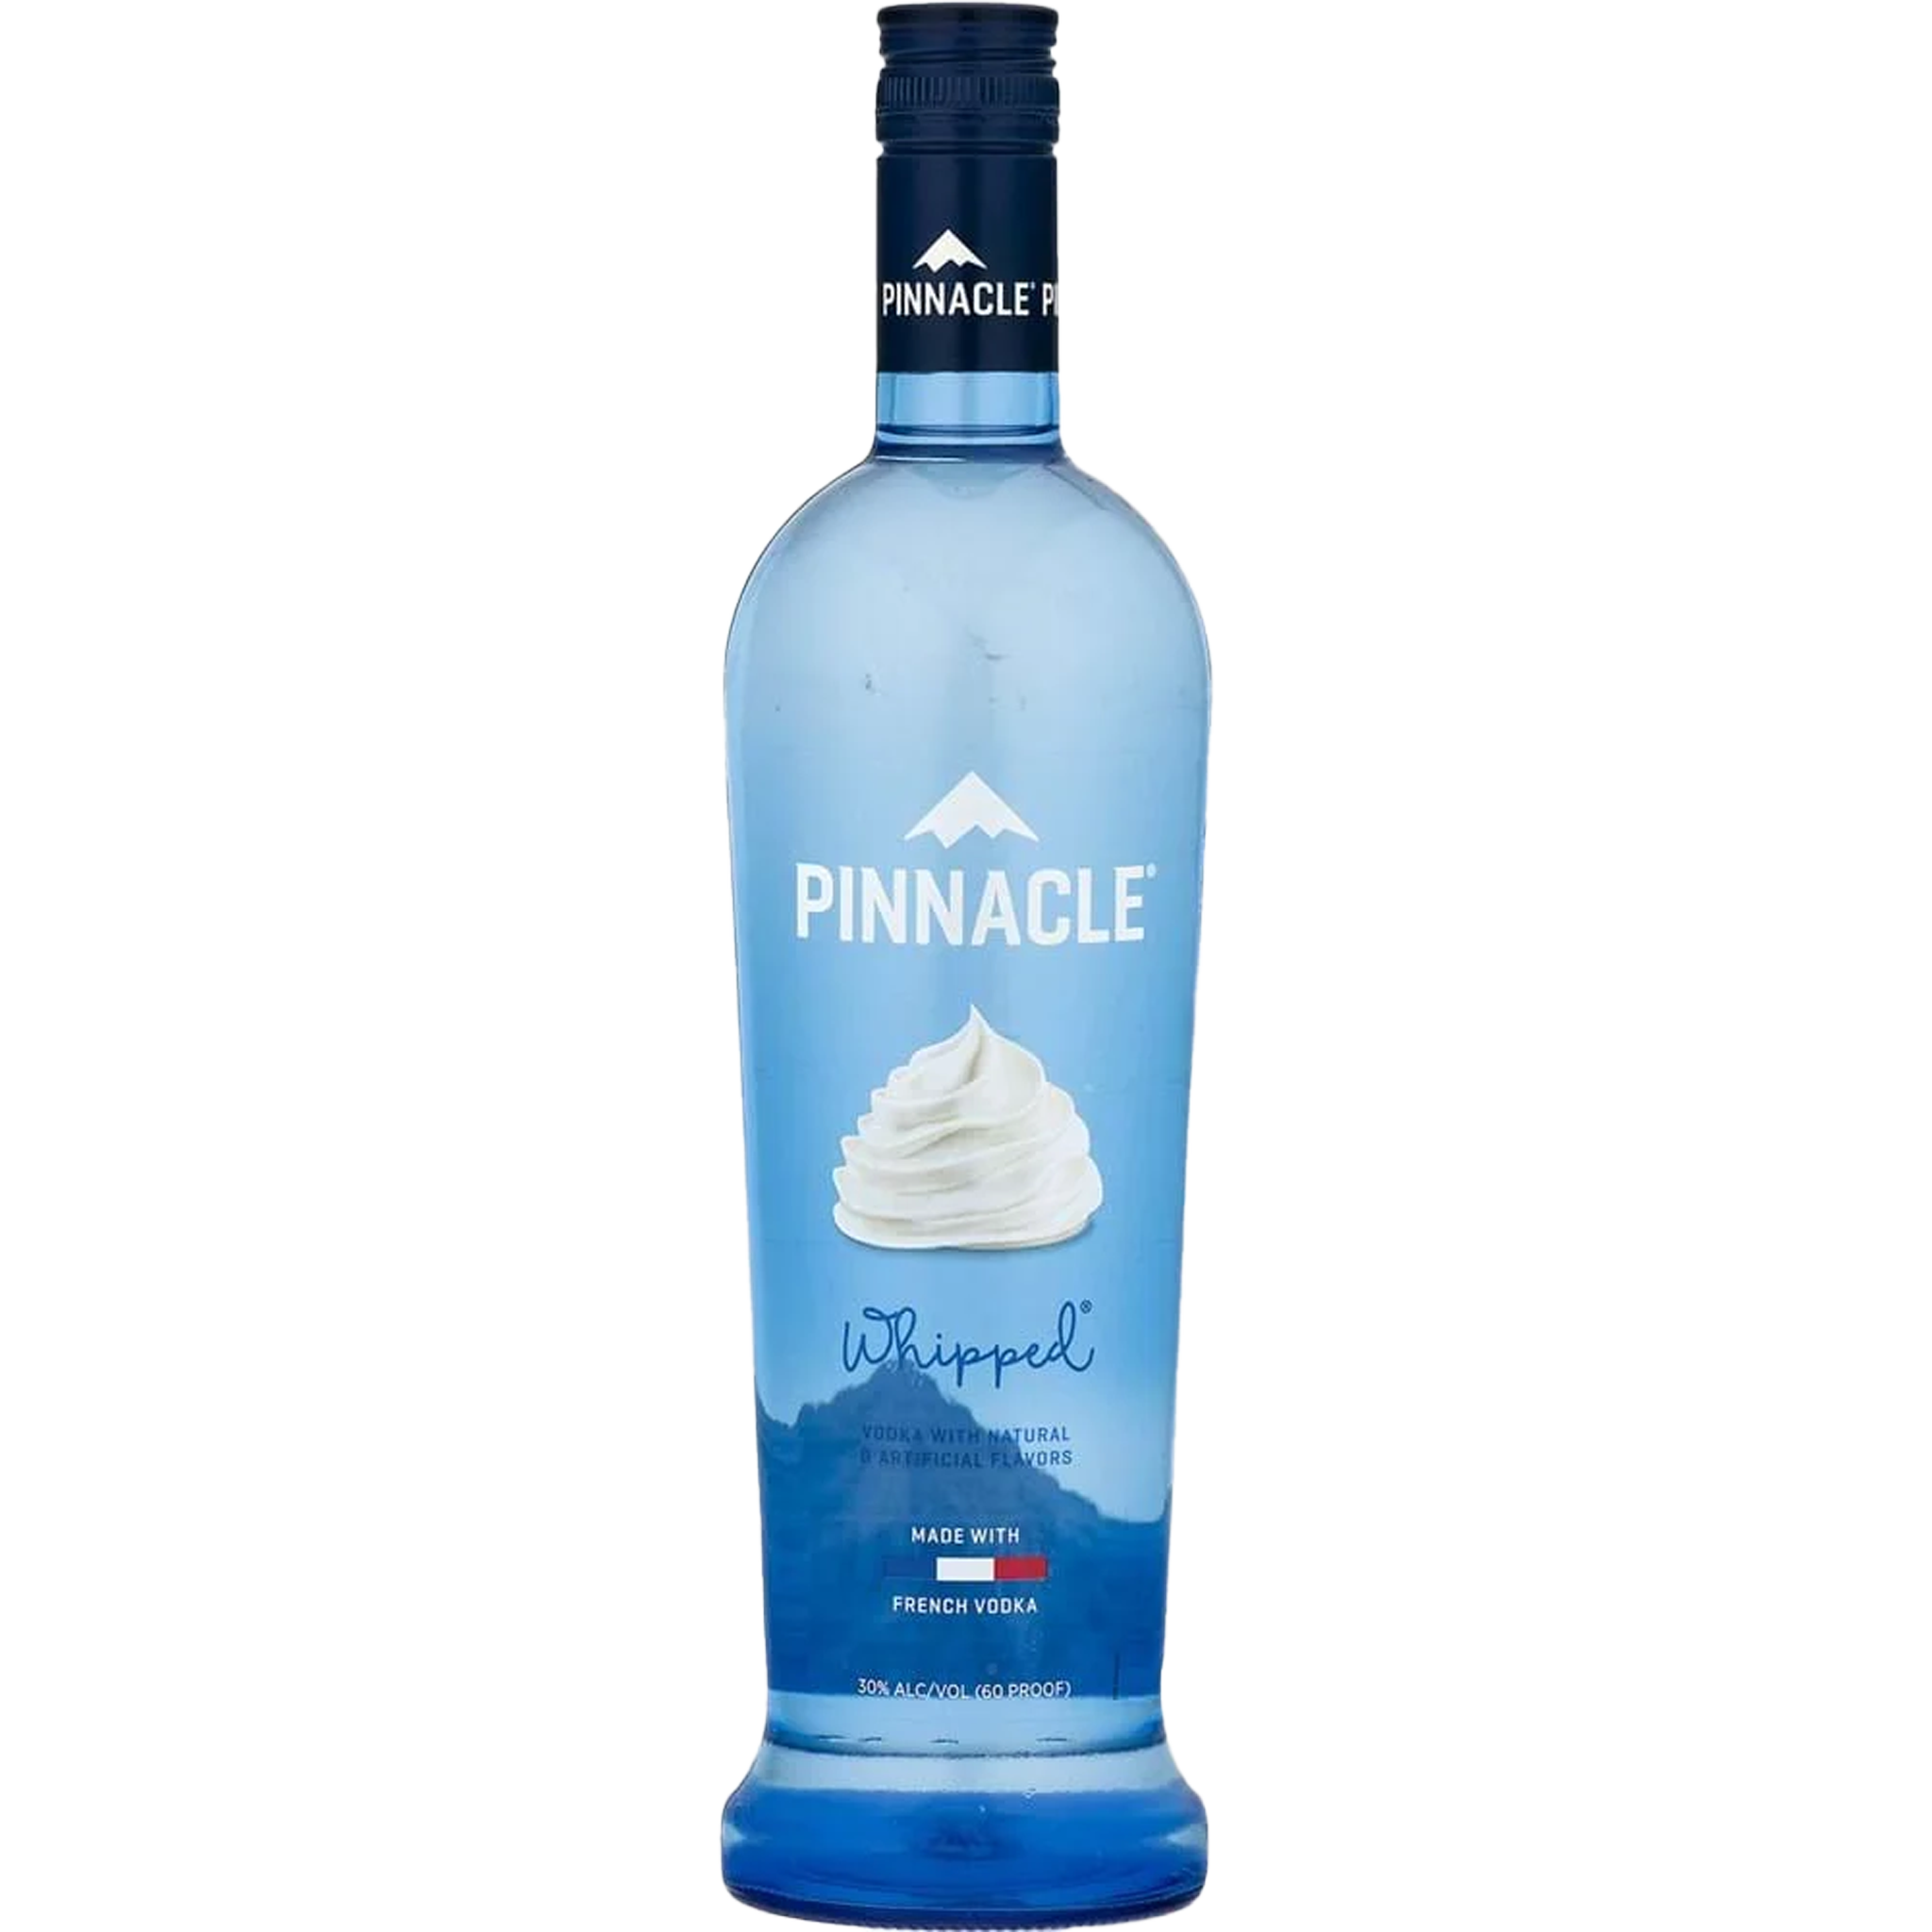 Pinnacle Whipped Cream Vodka